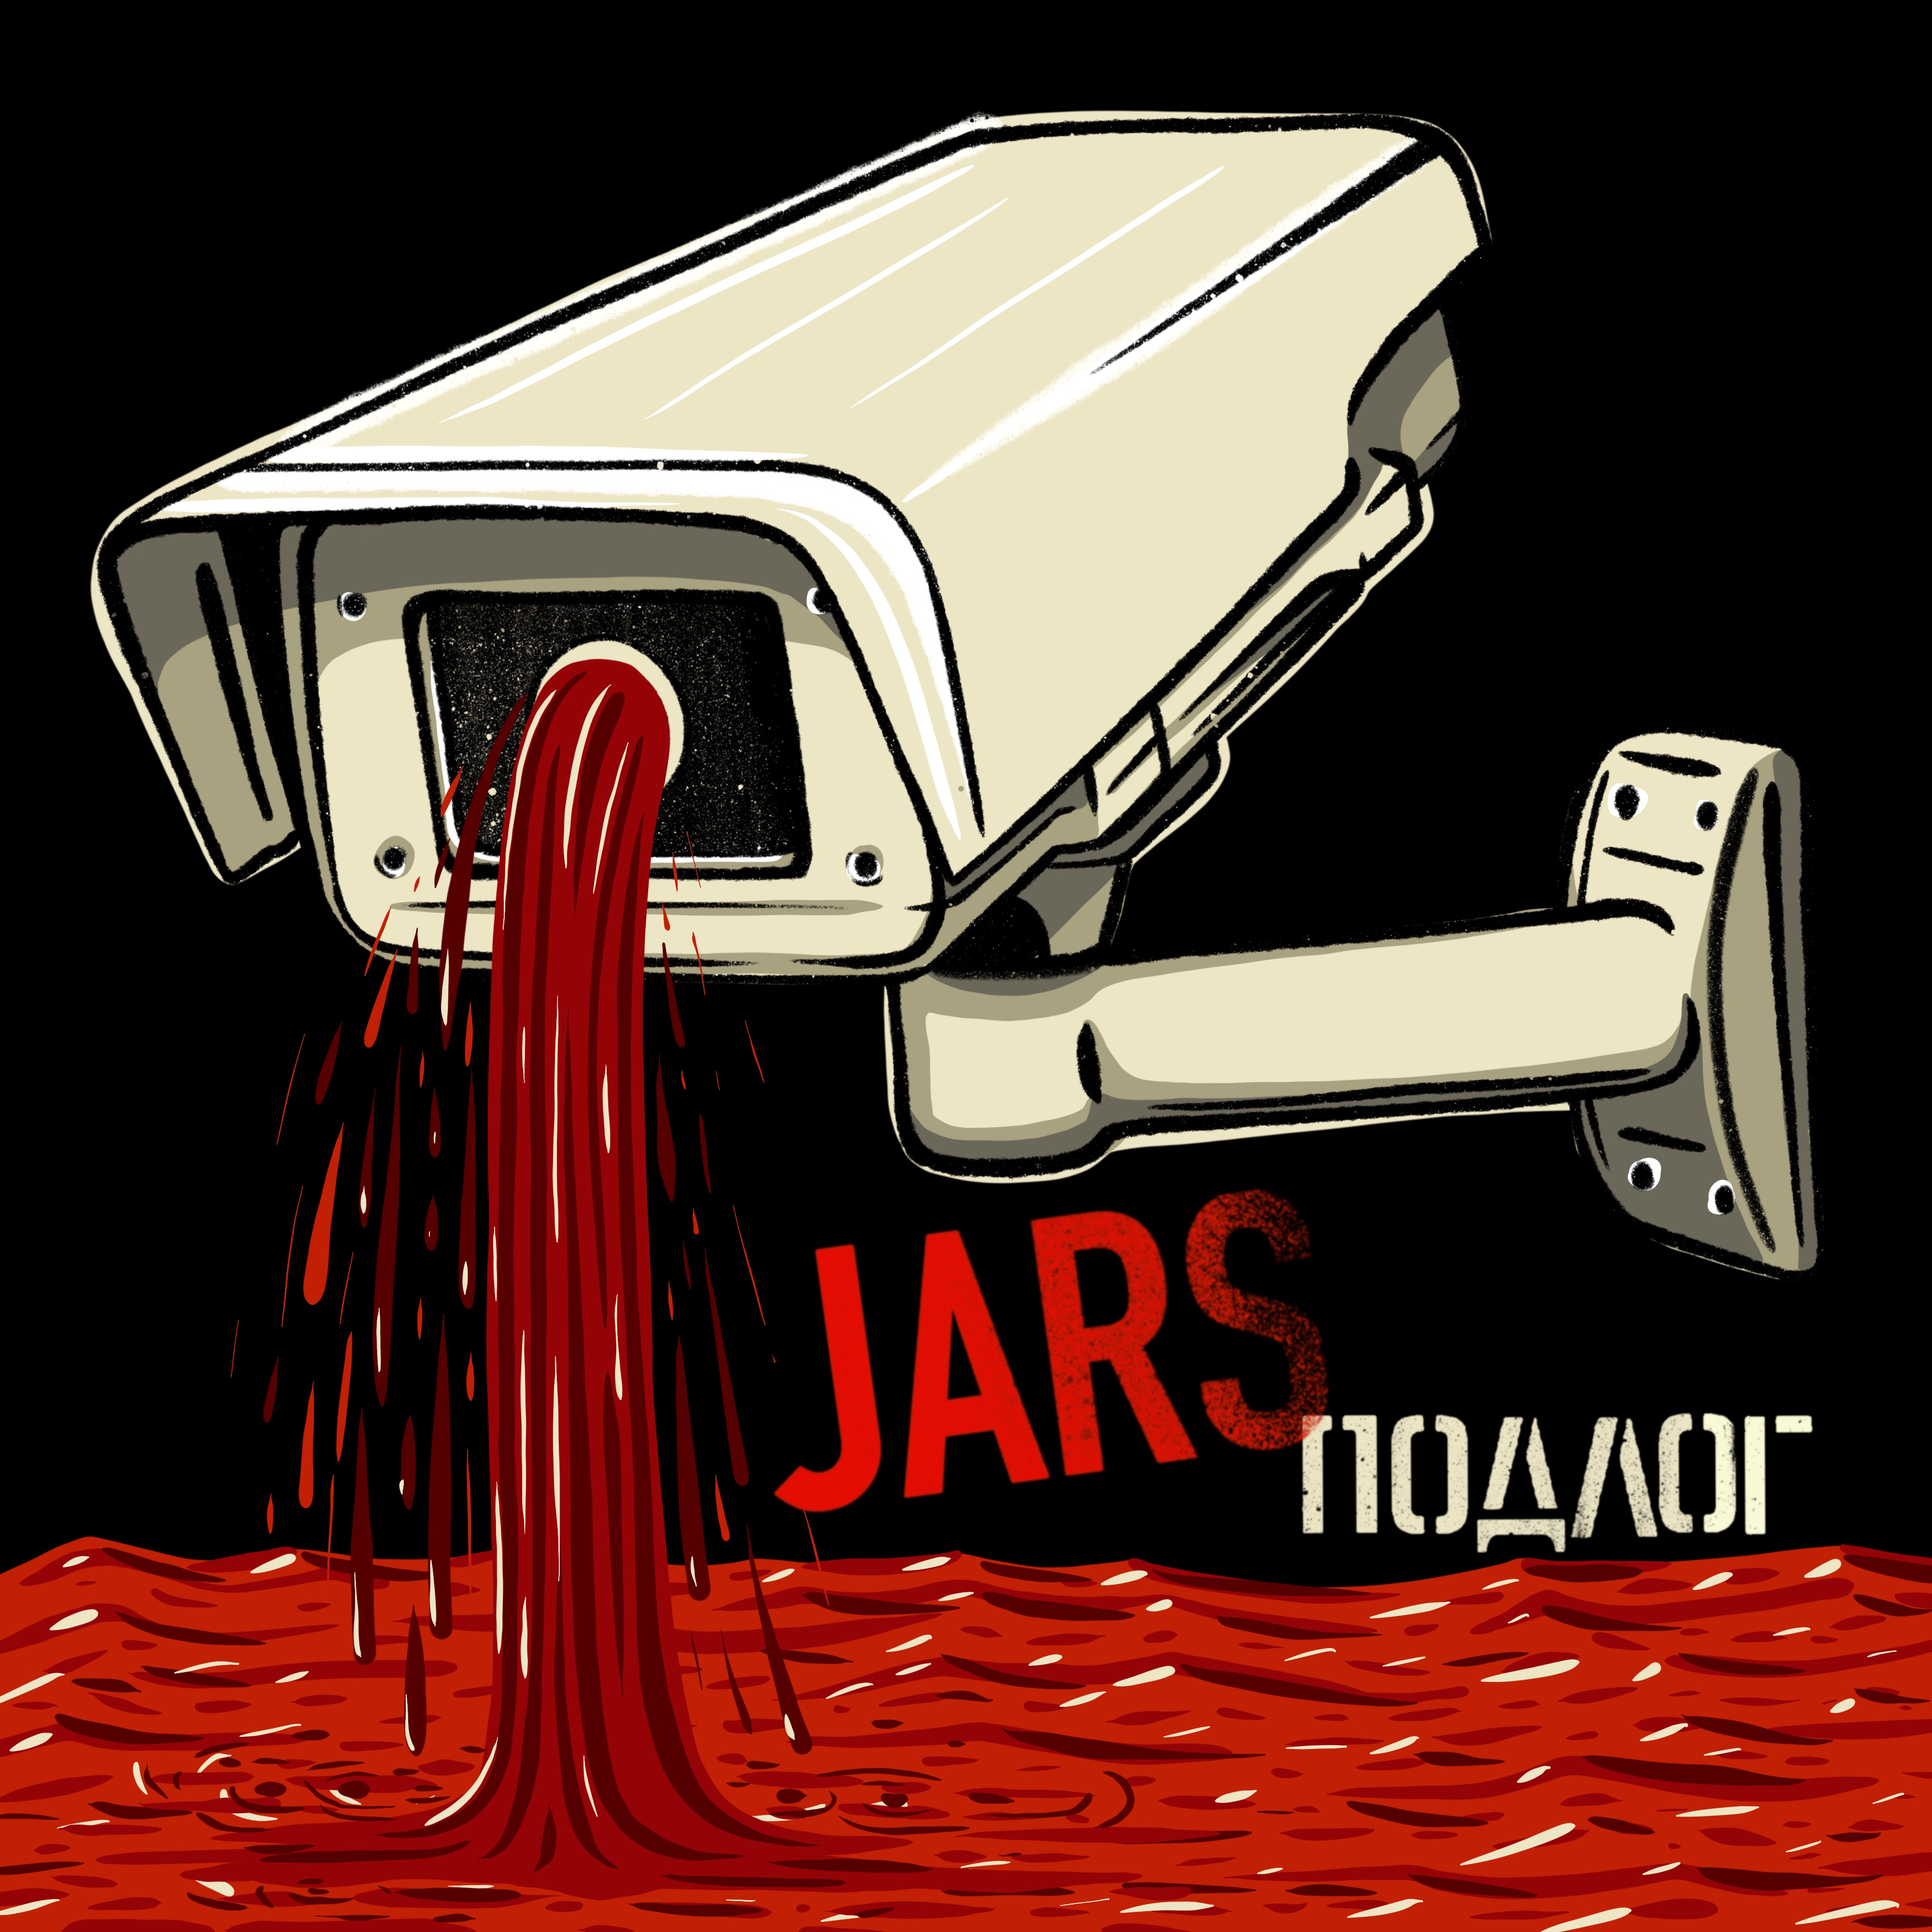 JARS, la banda rusa presenta su EP “ПОДЛОГ” , os dejamos las fechas de su gira